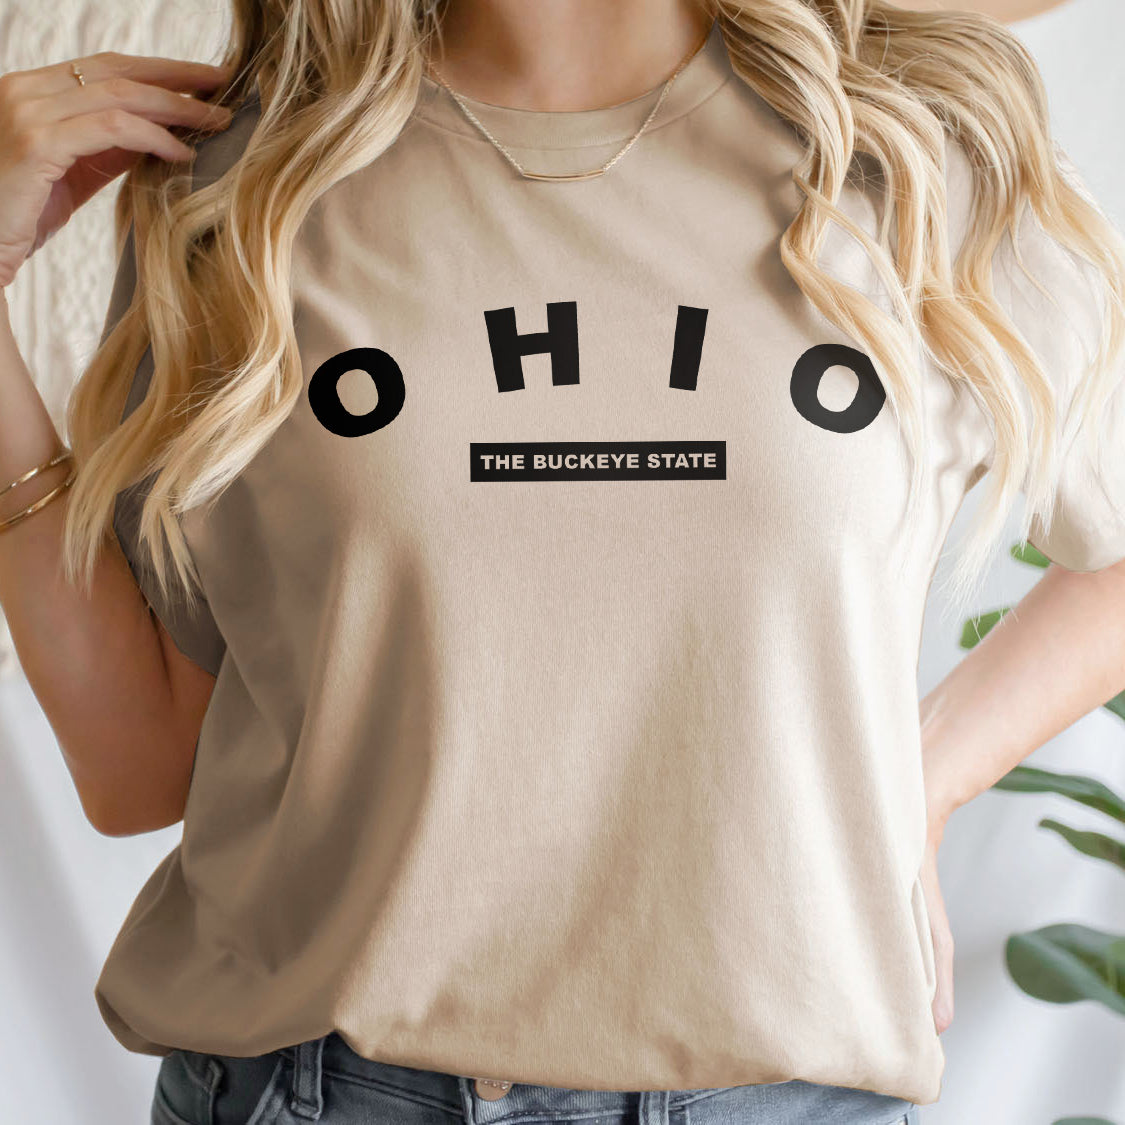 Ohio The Buckeye State T-shirt - United States Name & Slogan Minimal Design Printed Tee Shirt